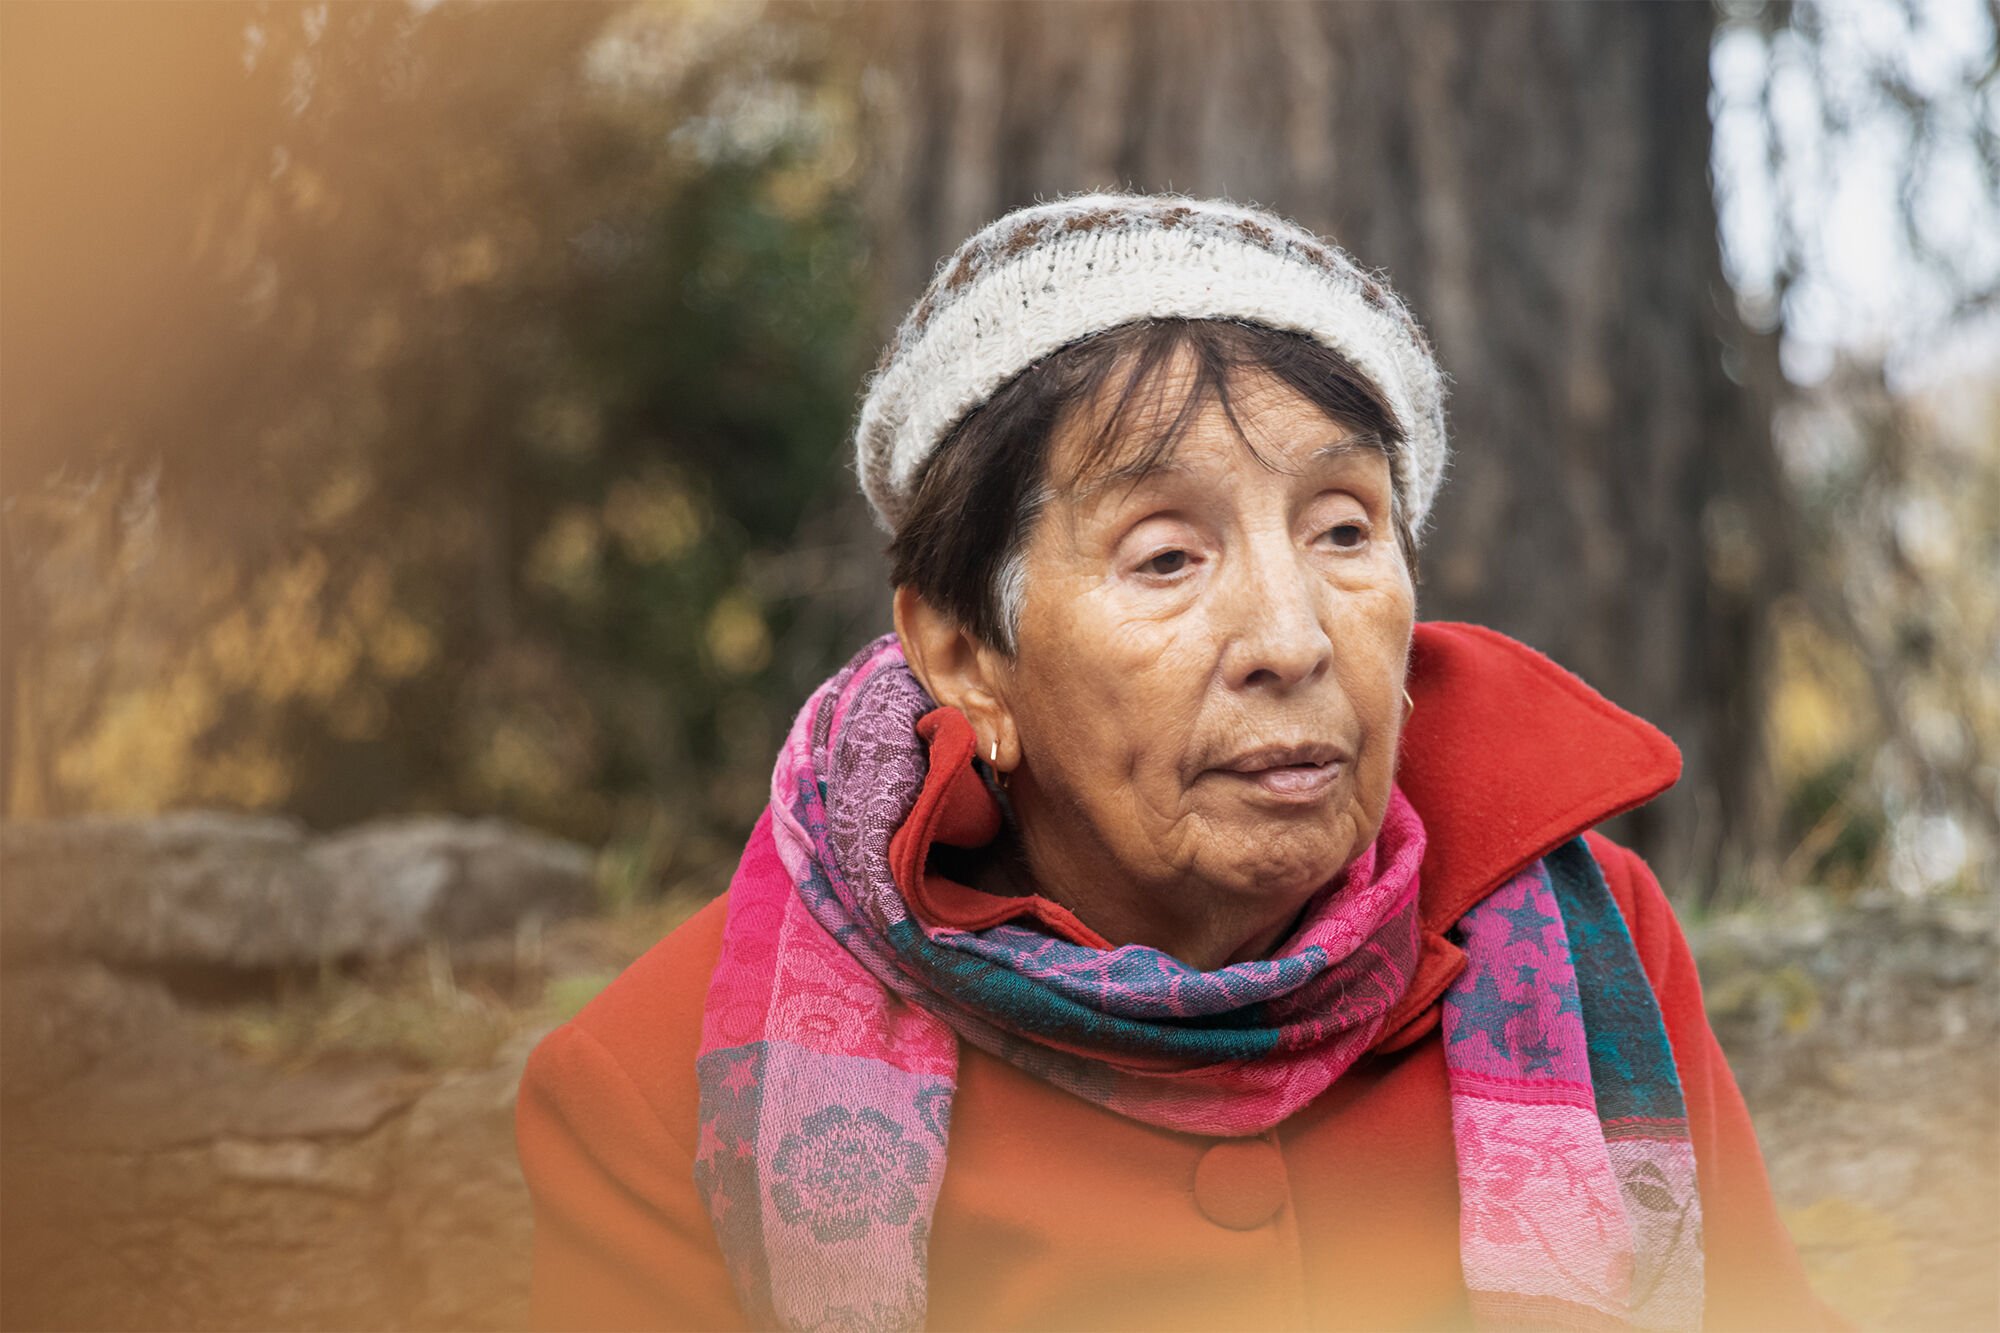 Adriana, 84, outside on a walk. Collaboration between ARC and Fotoskolan STHLM 2019.